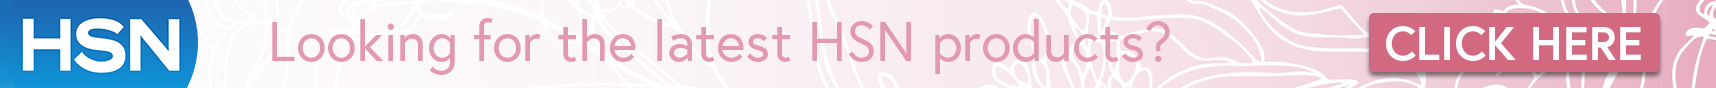 HSN Banner